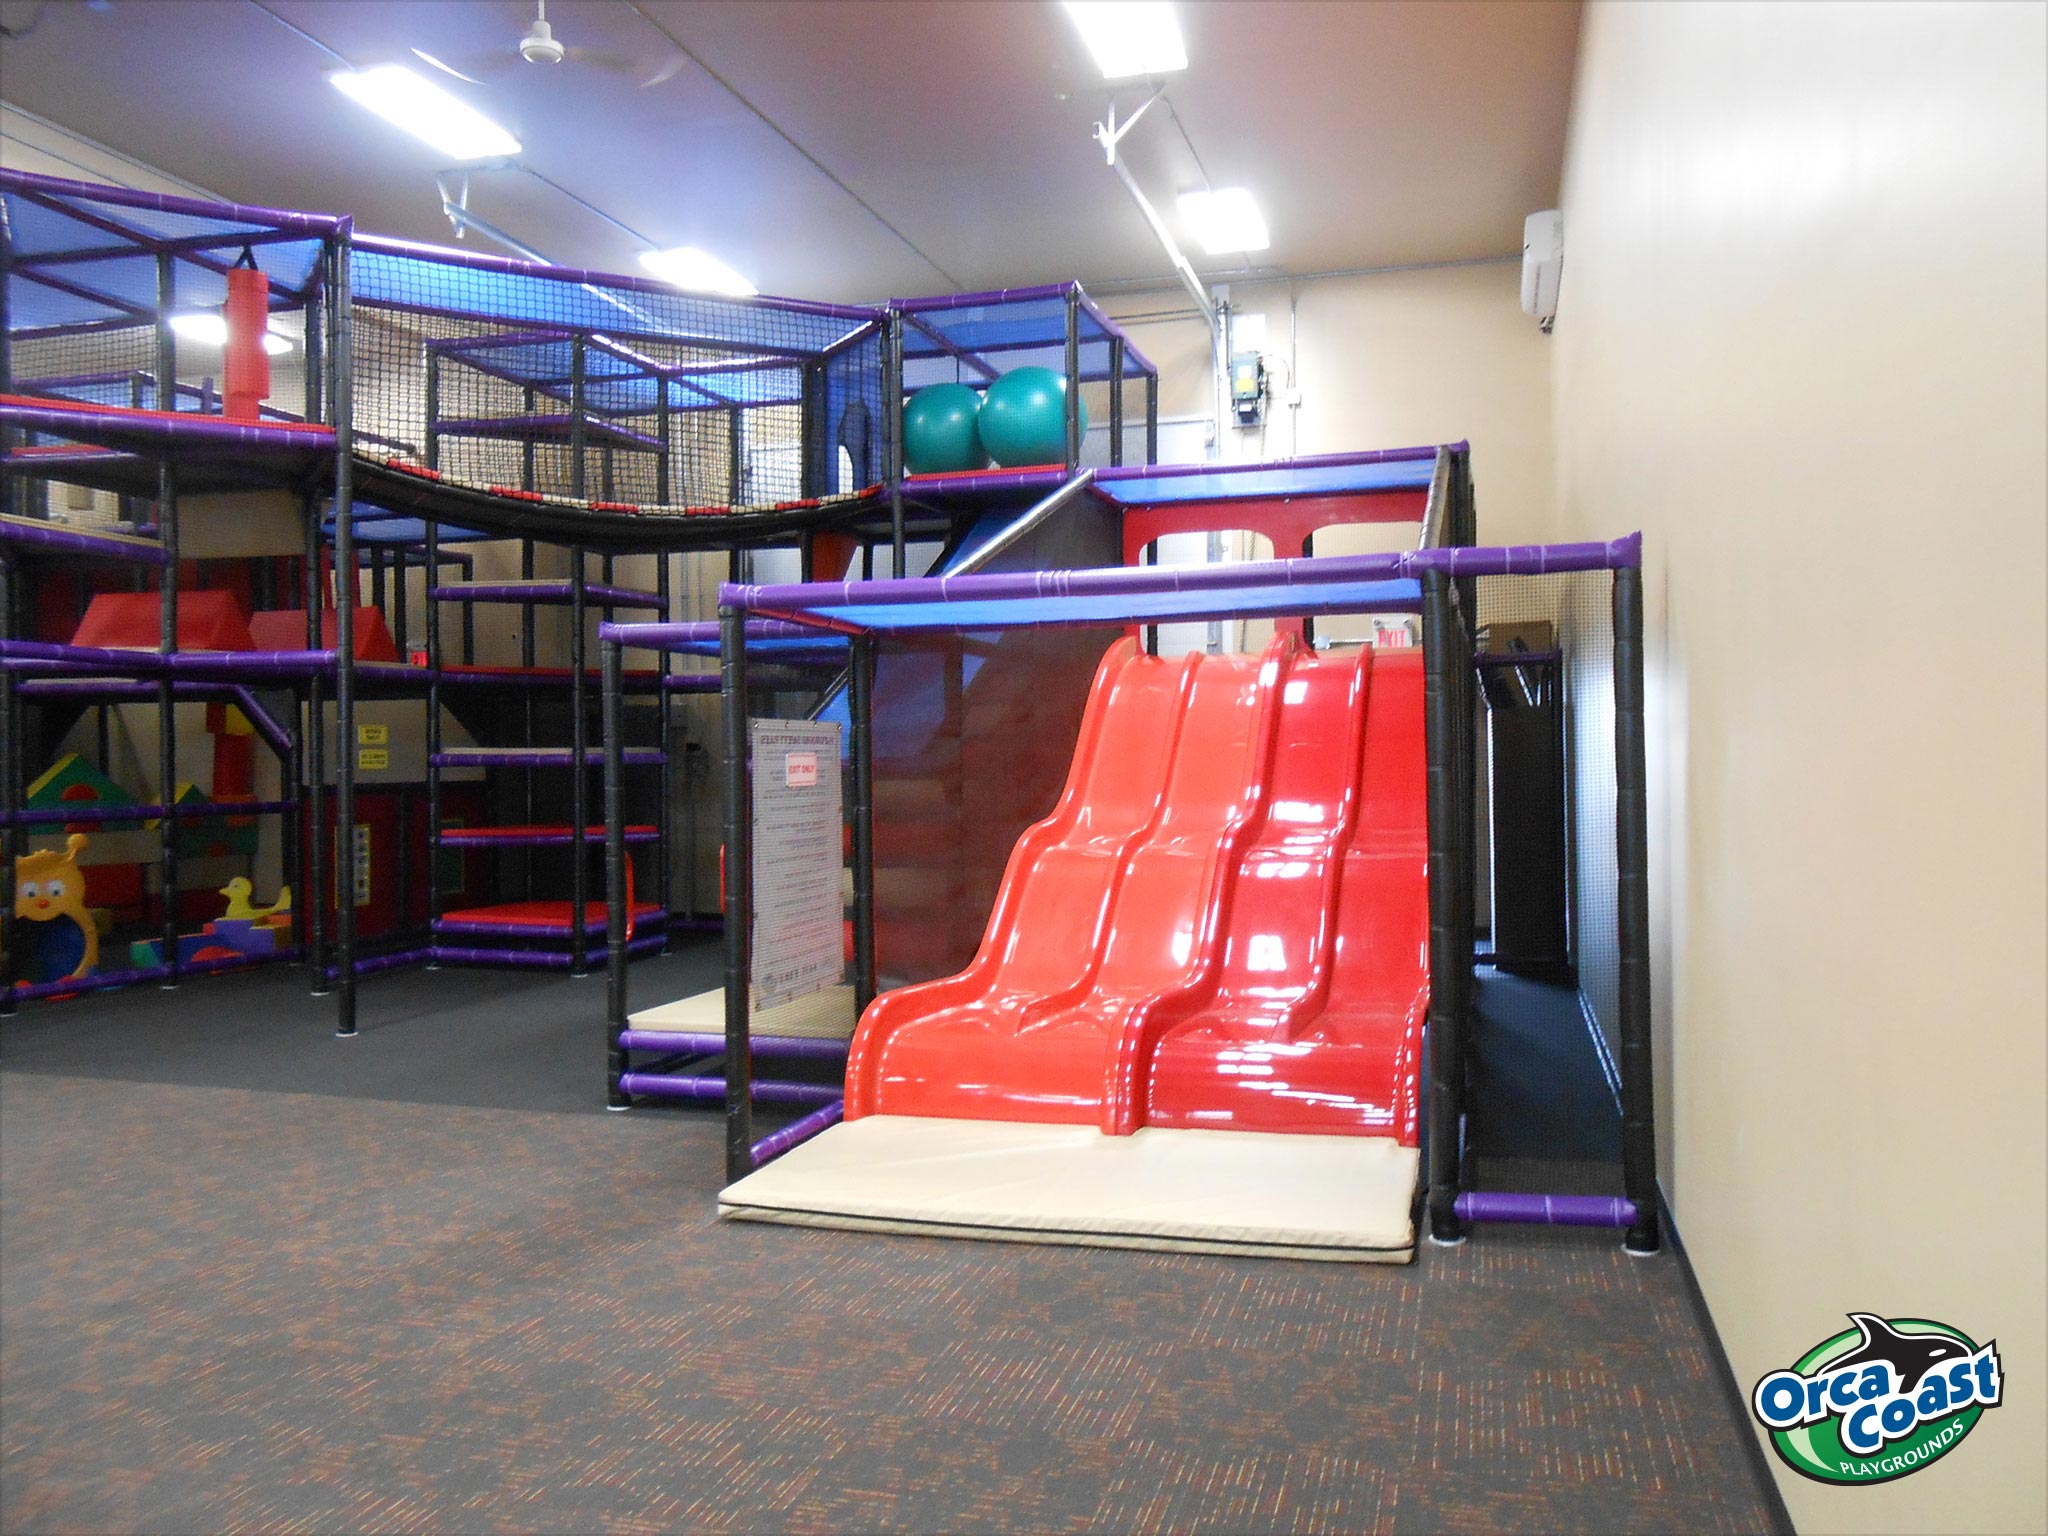 Orca Coast Playground Ltd. designed and built the indoor playground at CJ's Climb and Play in Warman, Saskatchewan